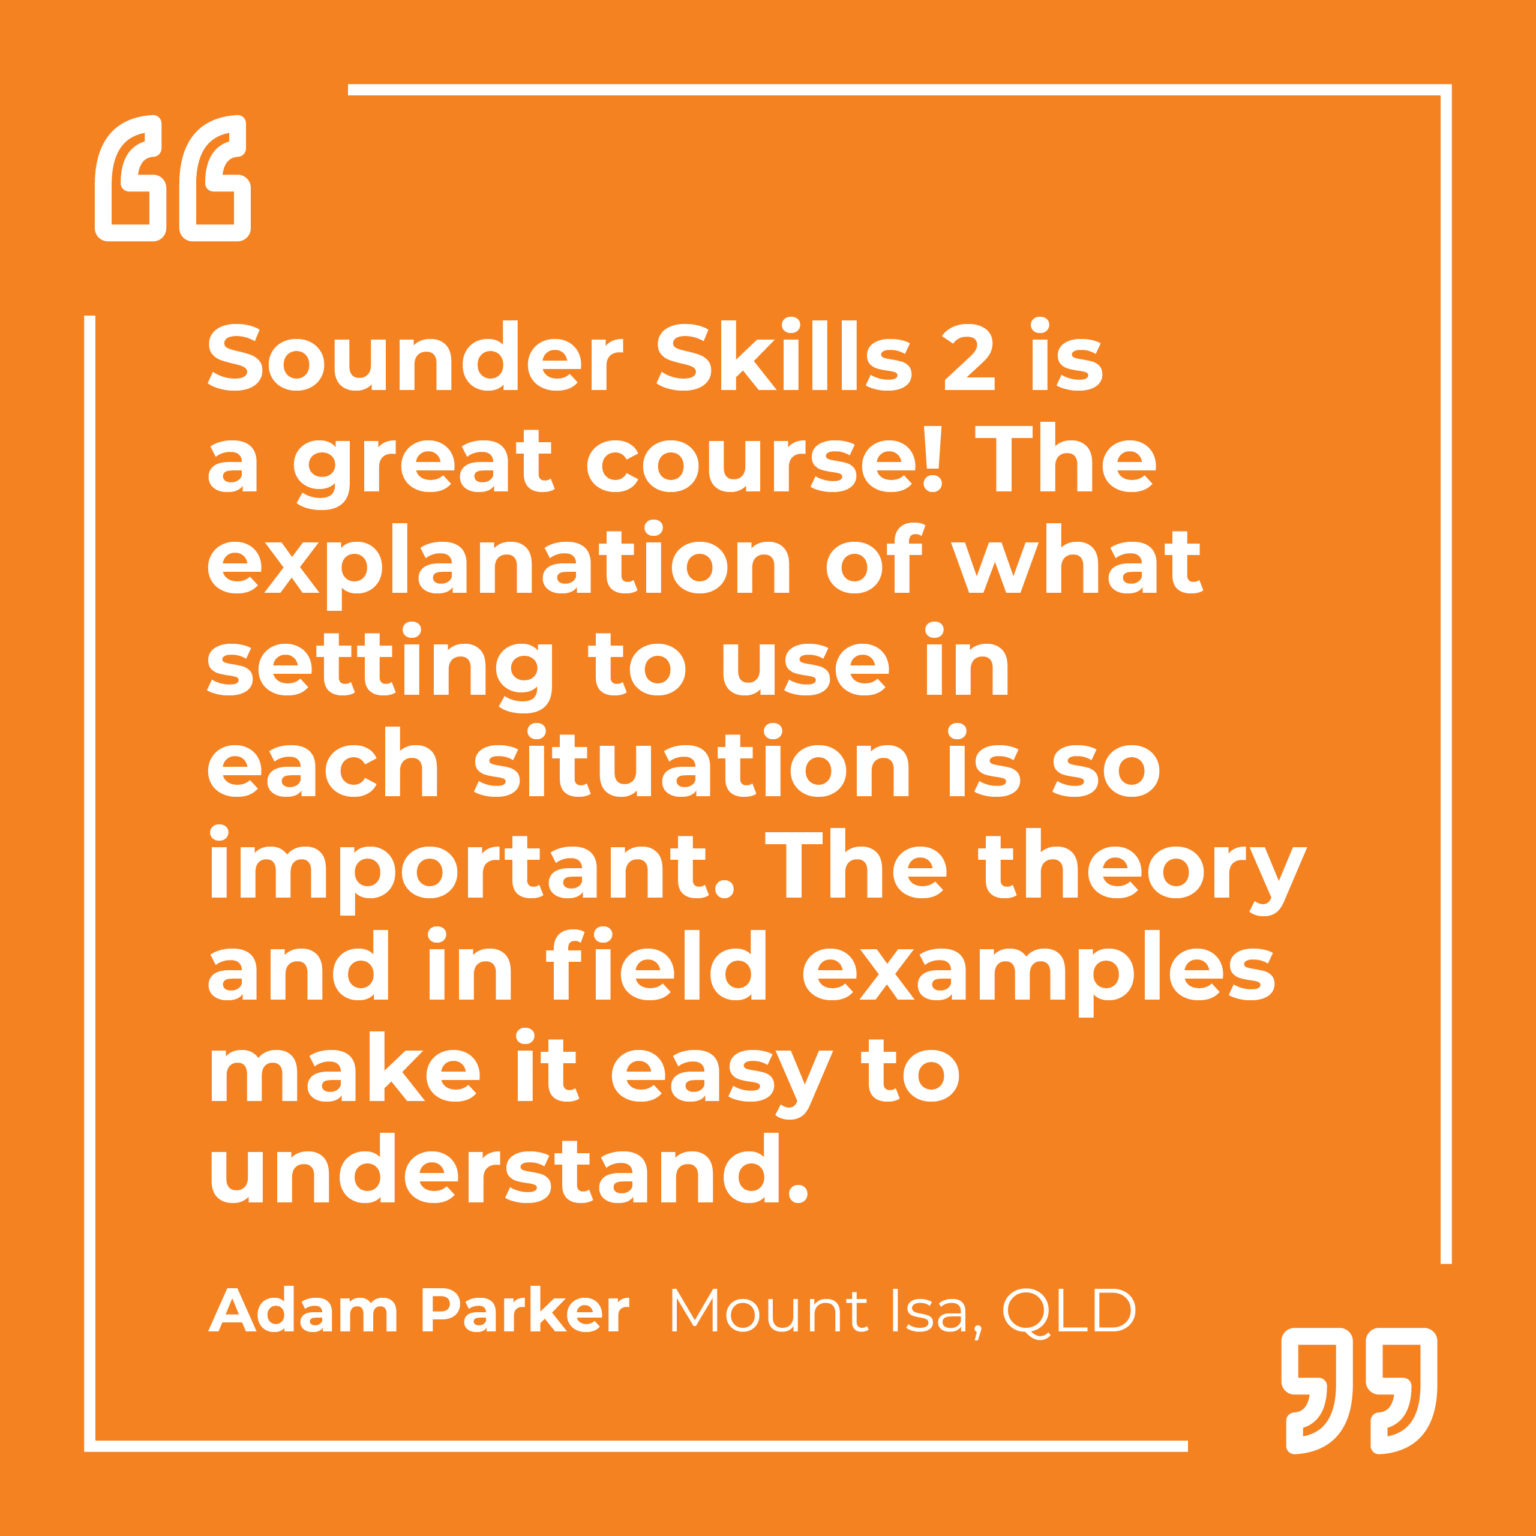 Sounder Skills 2 Student Feedback